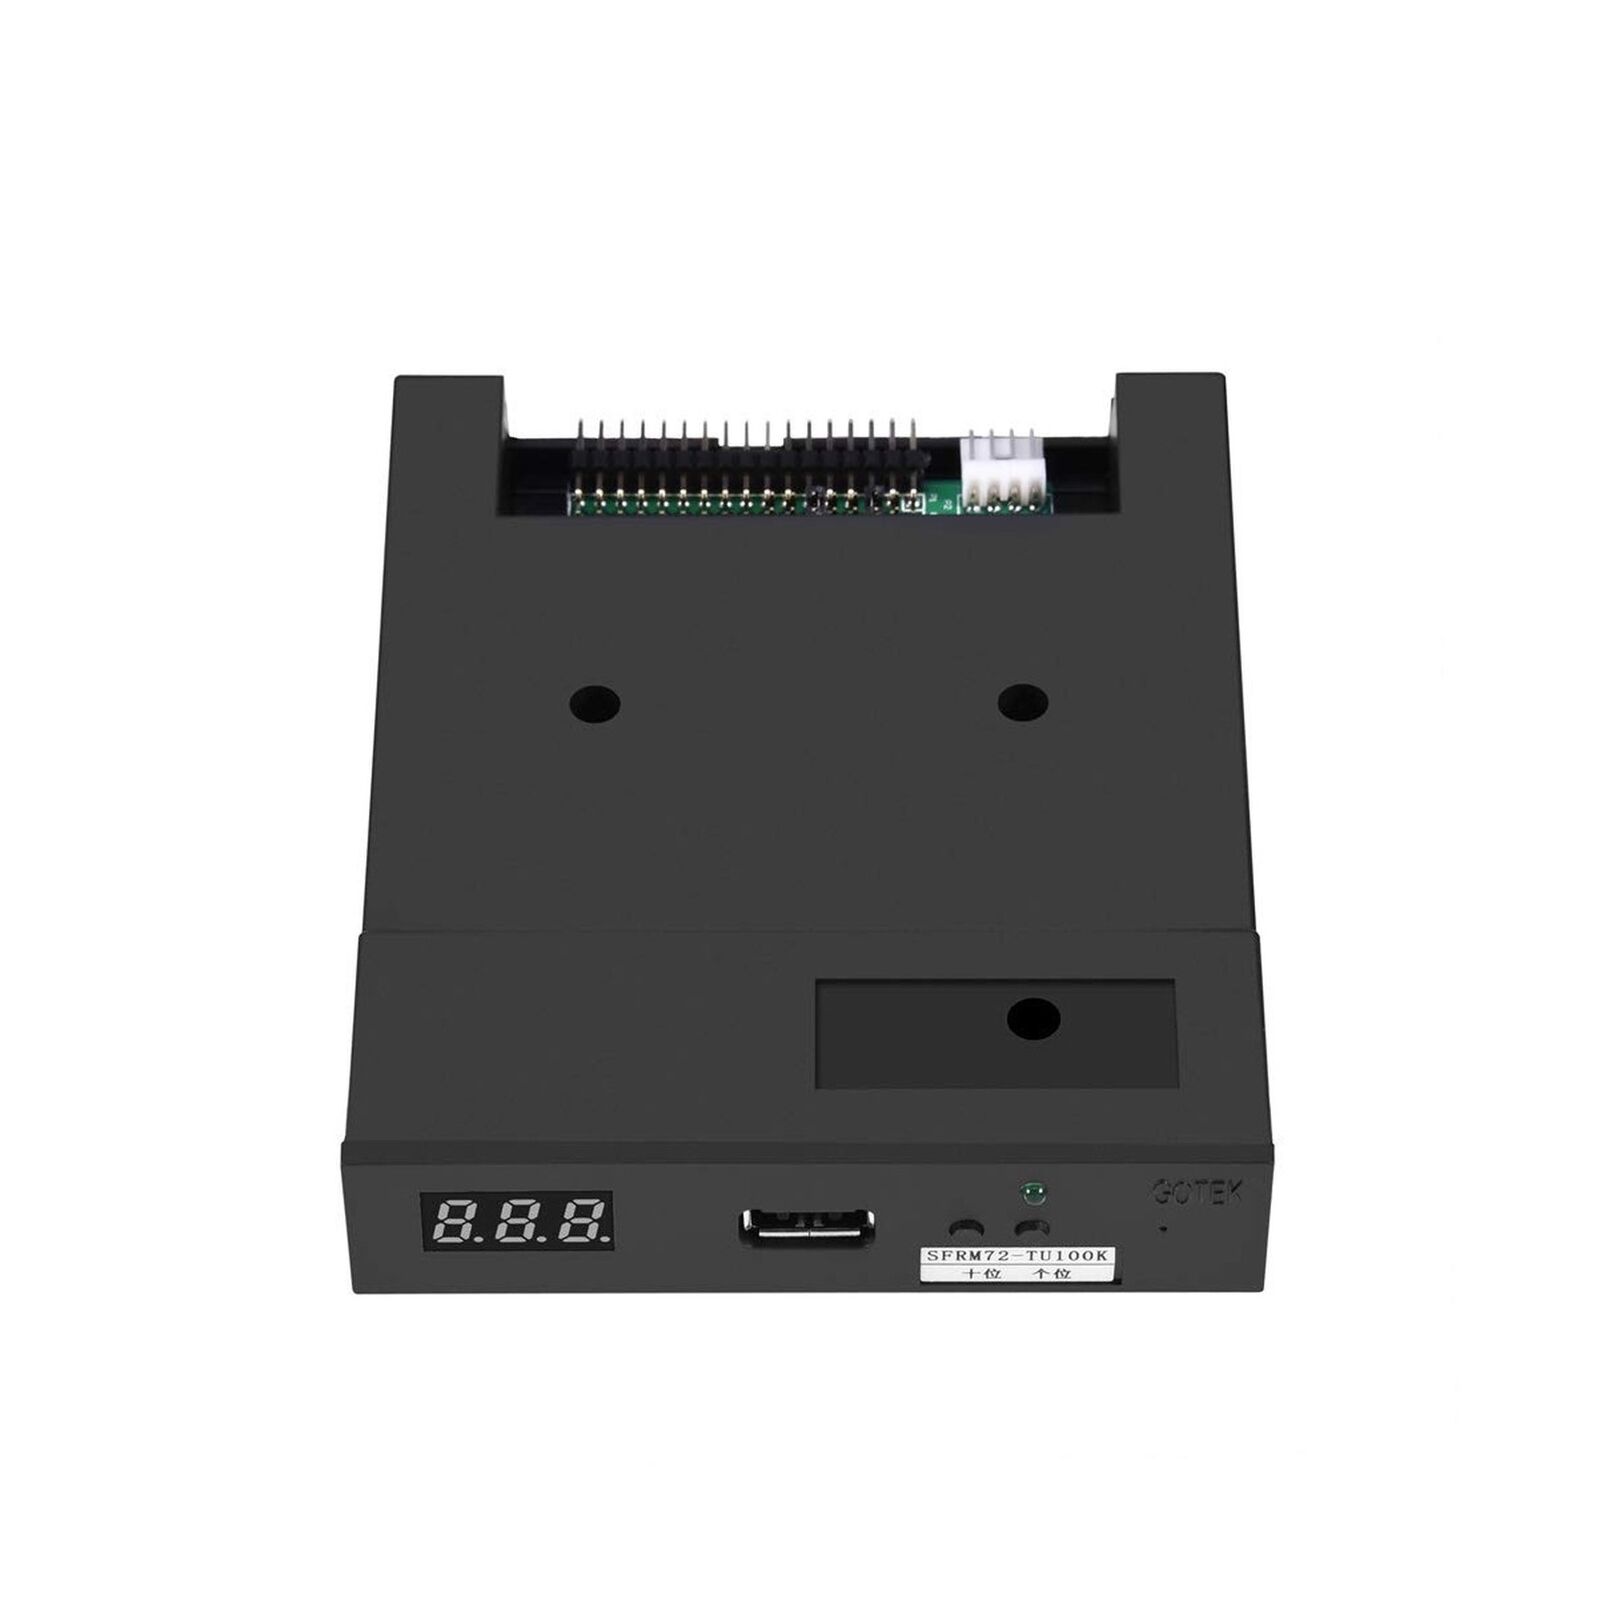 USB Floppy Drive Emulator, SFRM72-TU100K 3.5\